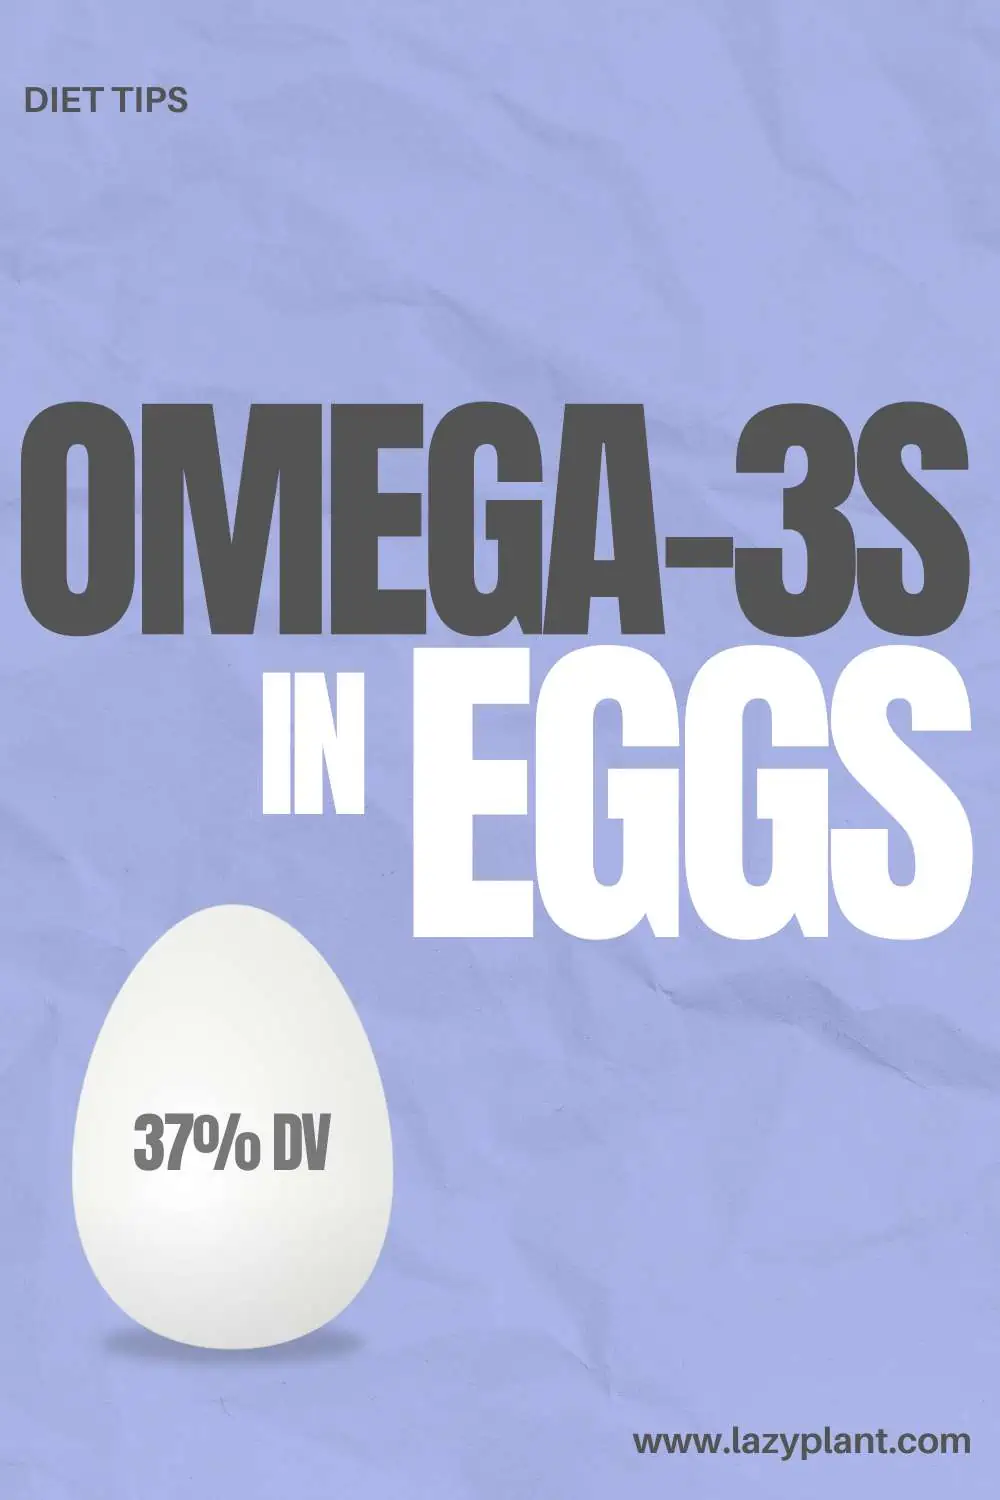 Omega-3 fatty acids in Eggs